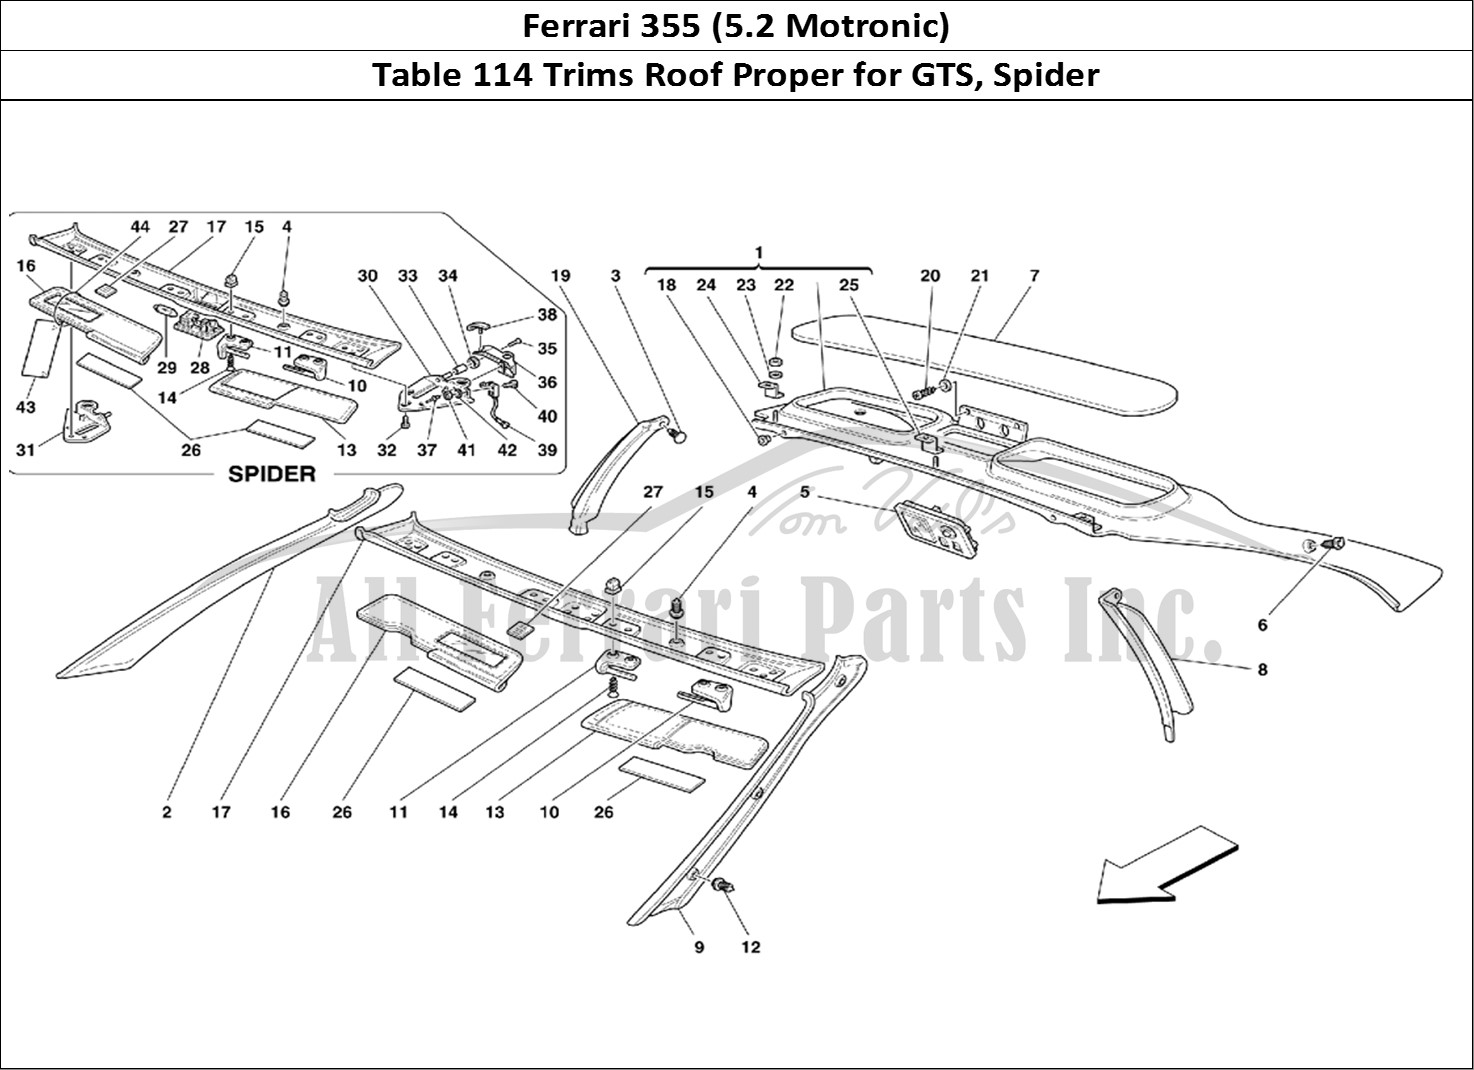 Ferrari Parts Ferrari 355 (5.2 Motronic) Page 114 Roof Trims -Valid for GTS